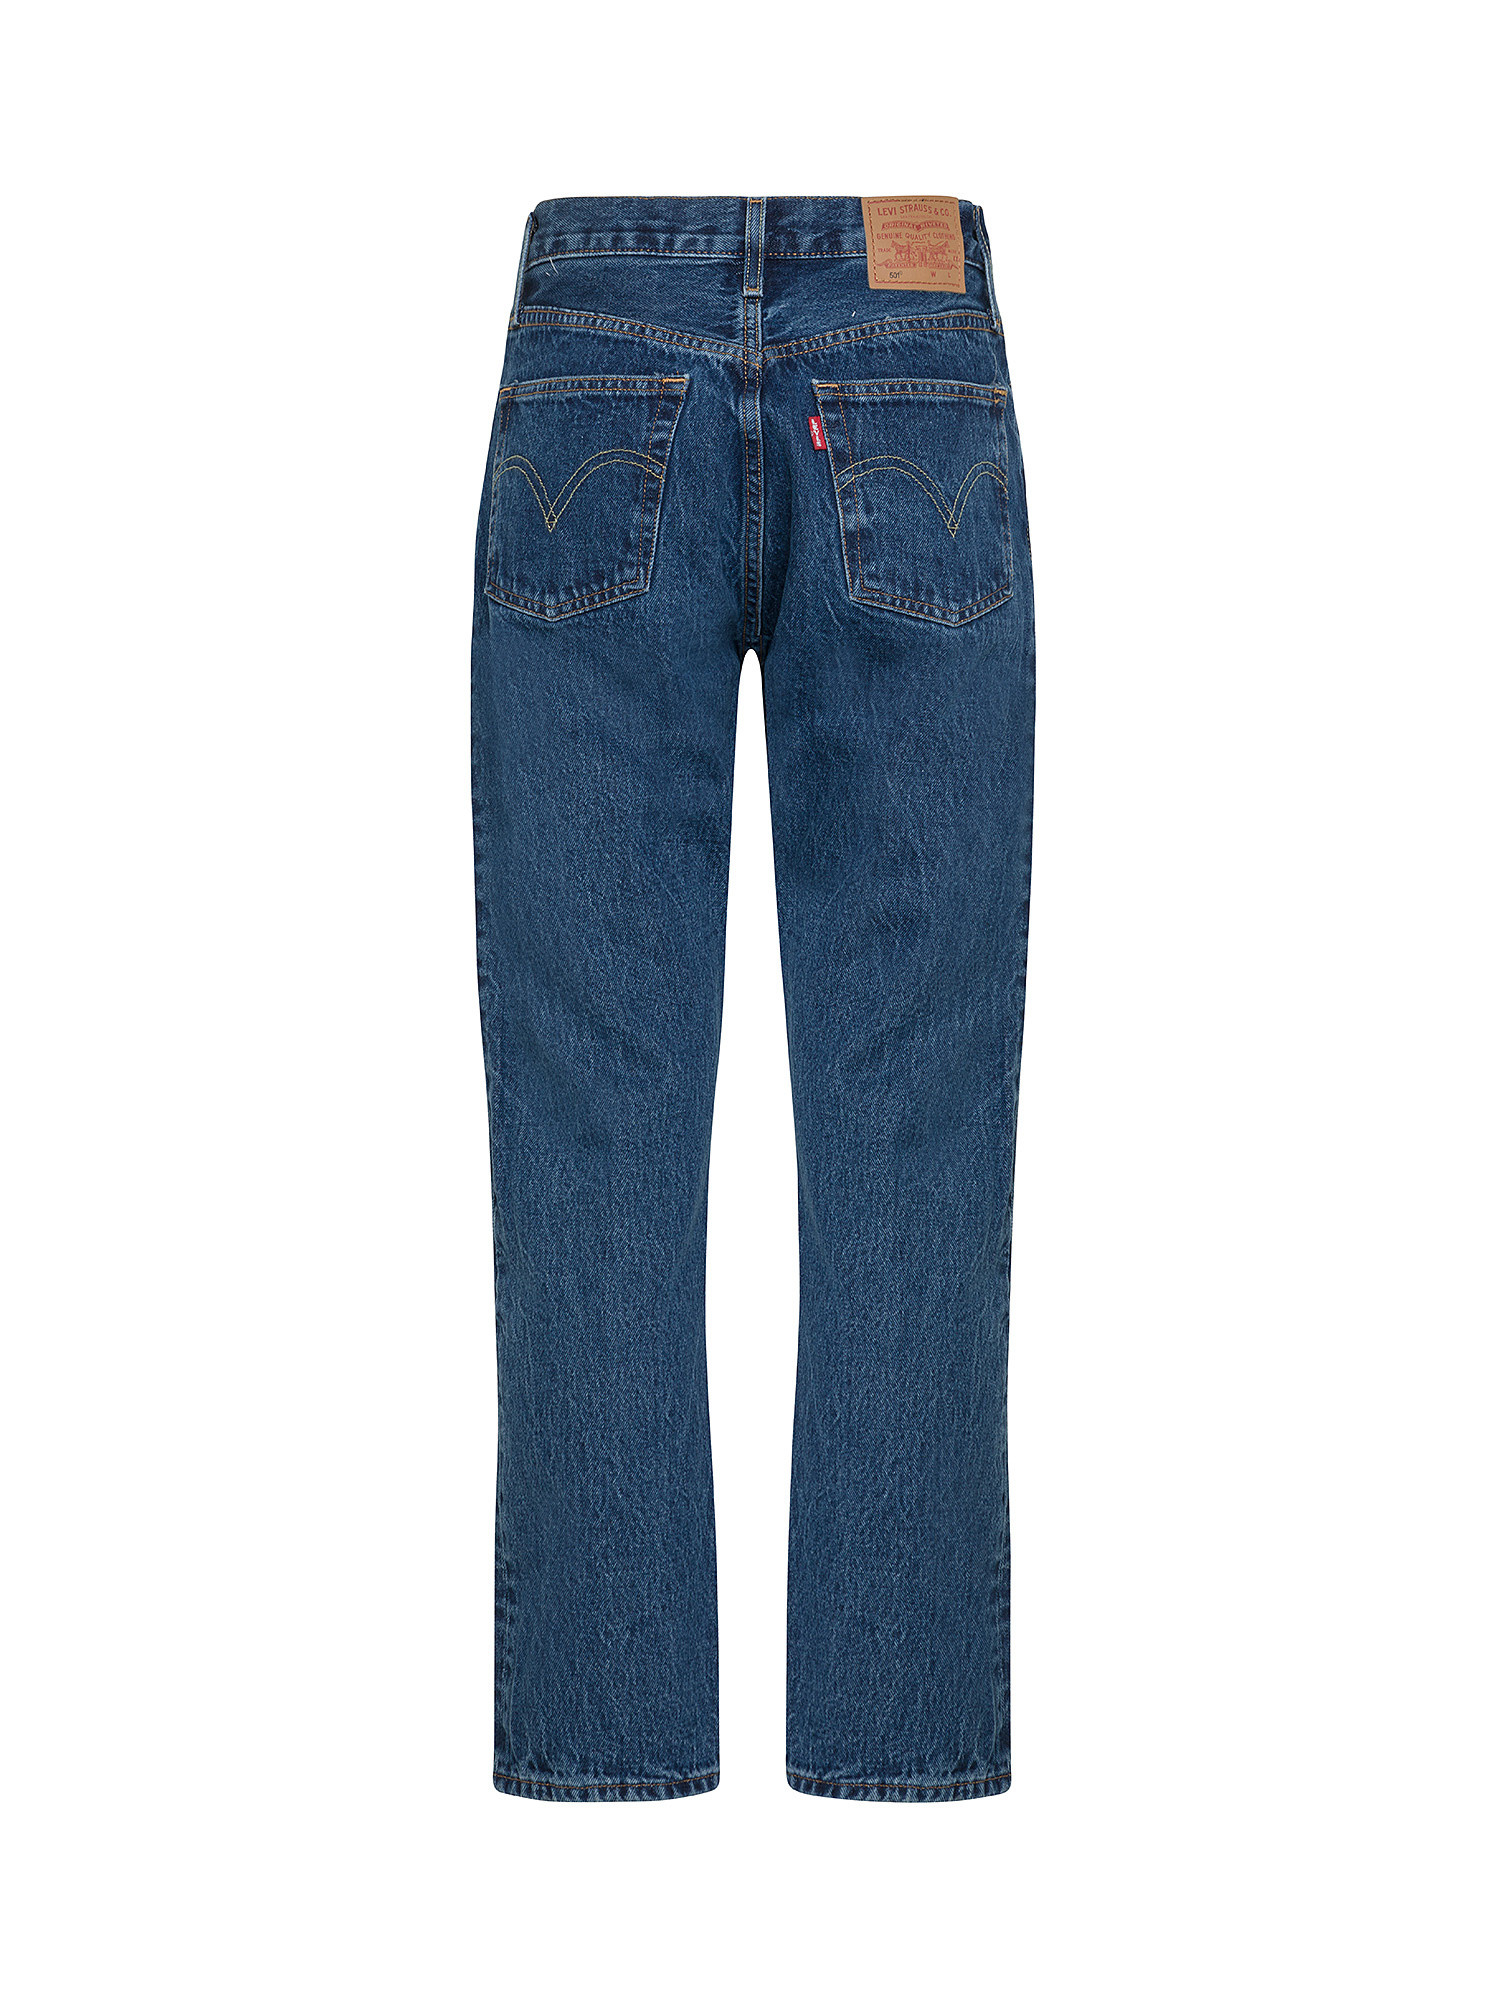 Levi's - jeans 501® cropped, Denim, large image number 1